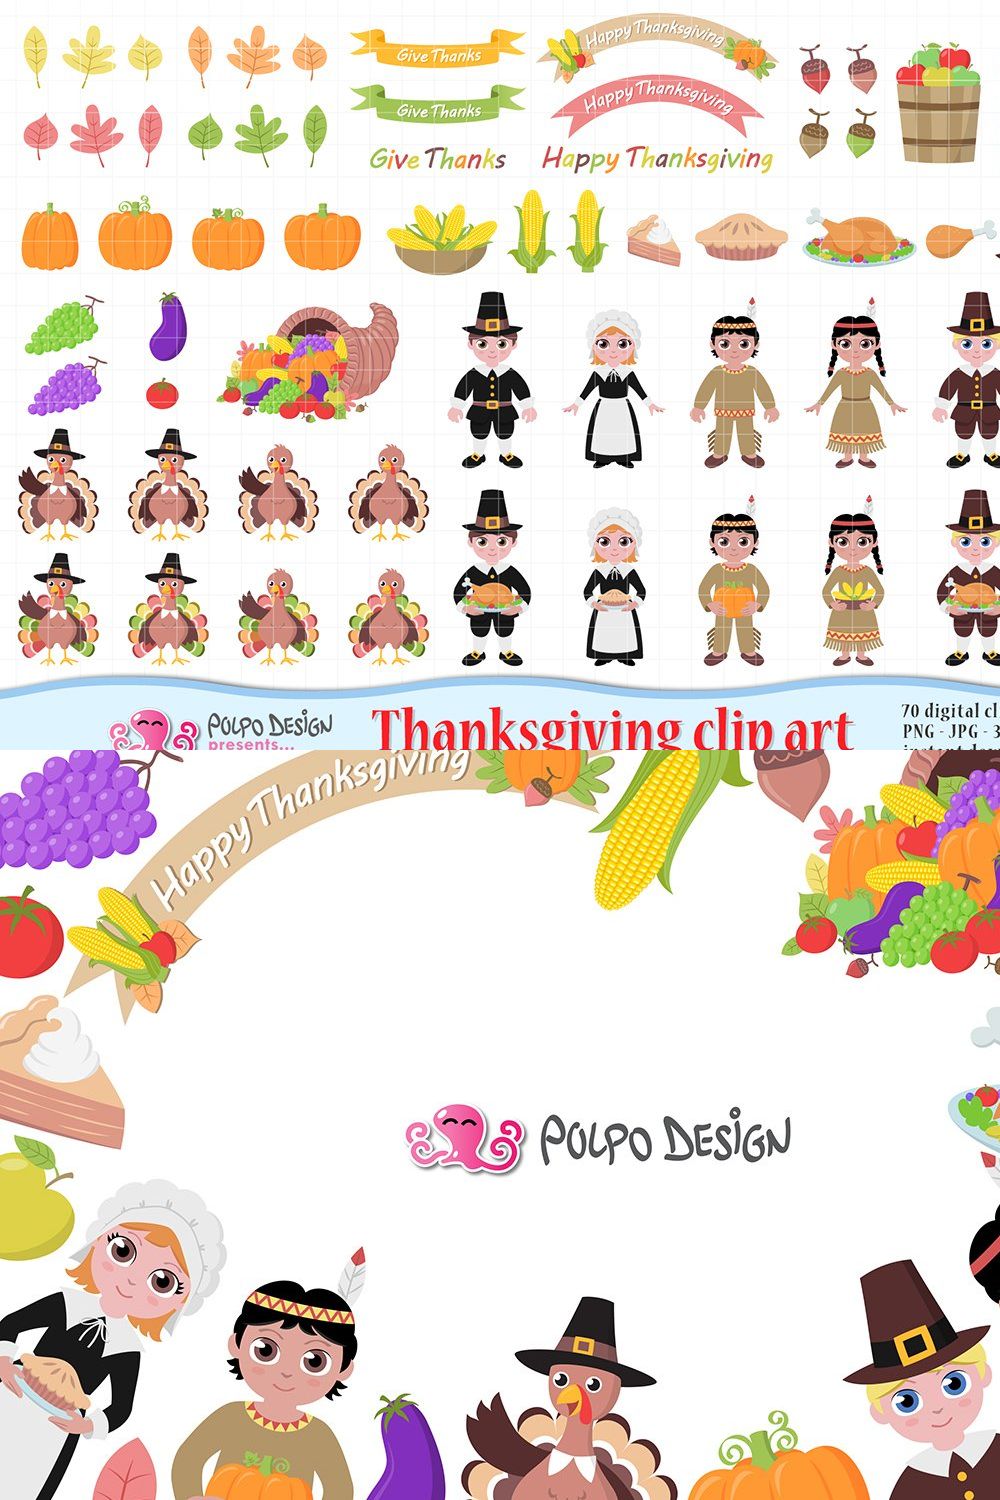 Thanksgiving clip art pinterest preview image.